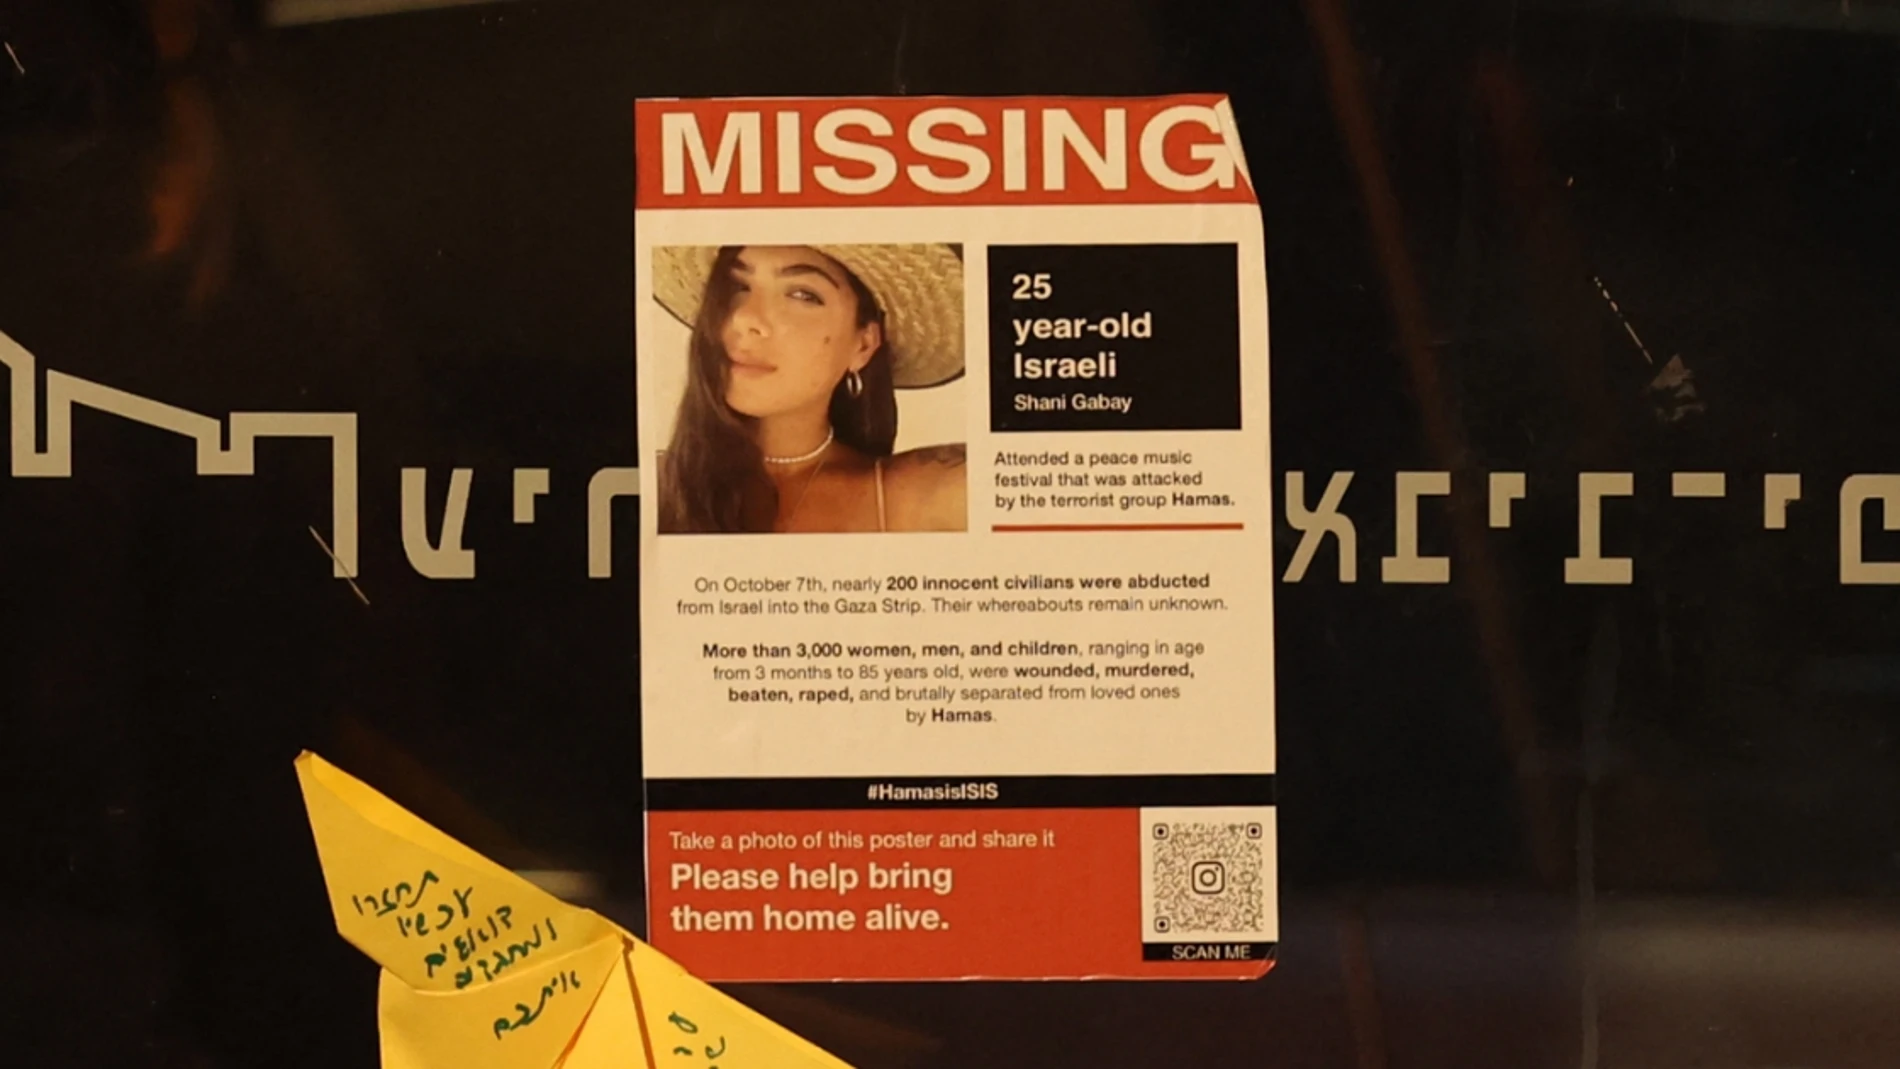 Cartel para encontrar a la joven israelí desaparecida Shani Gabay